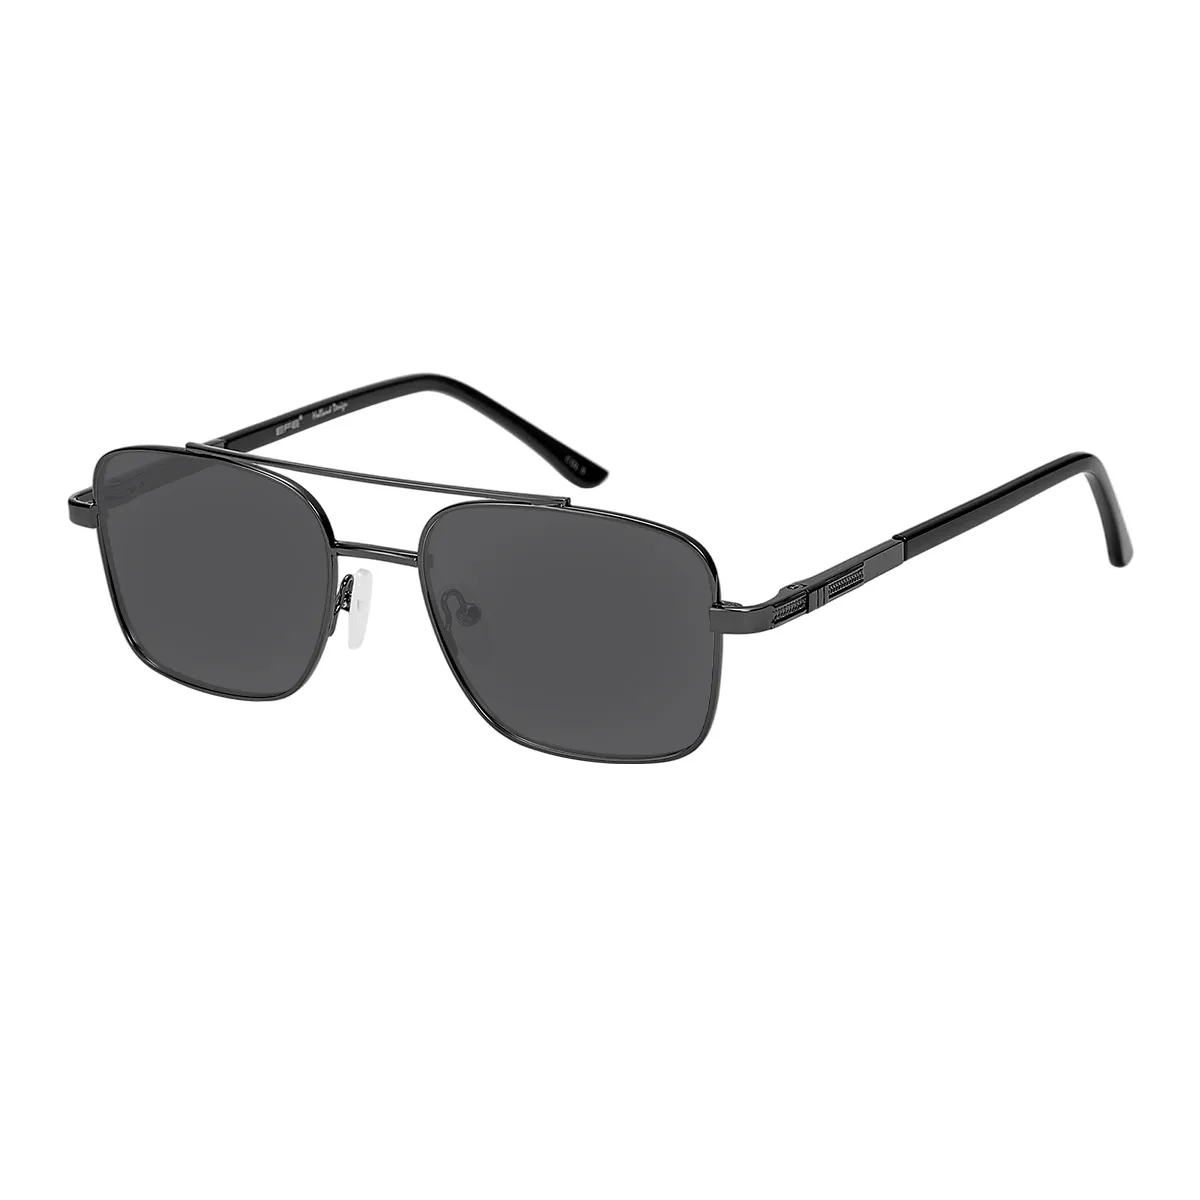 Elisha - Square Black Sunglasses for Men